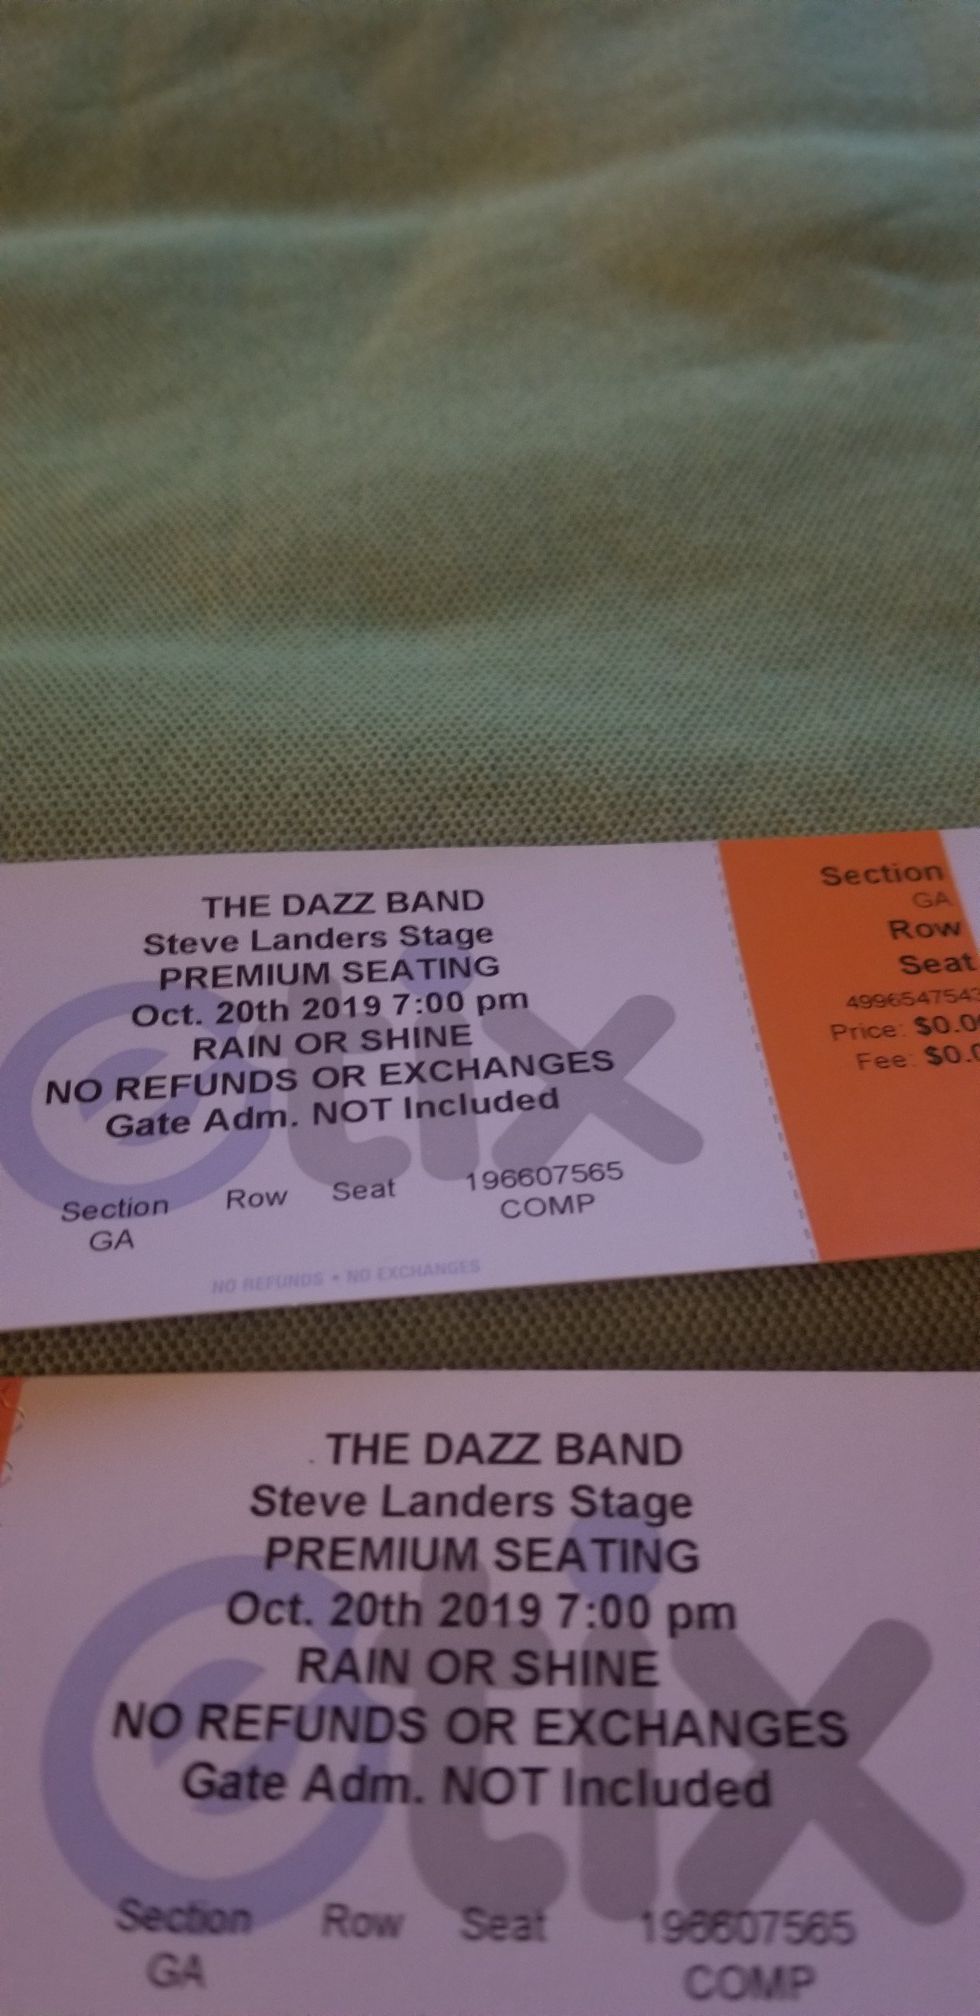 Premium seating for dazz band